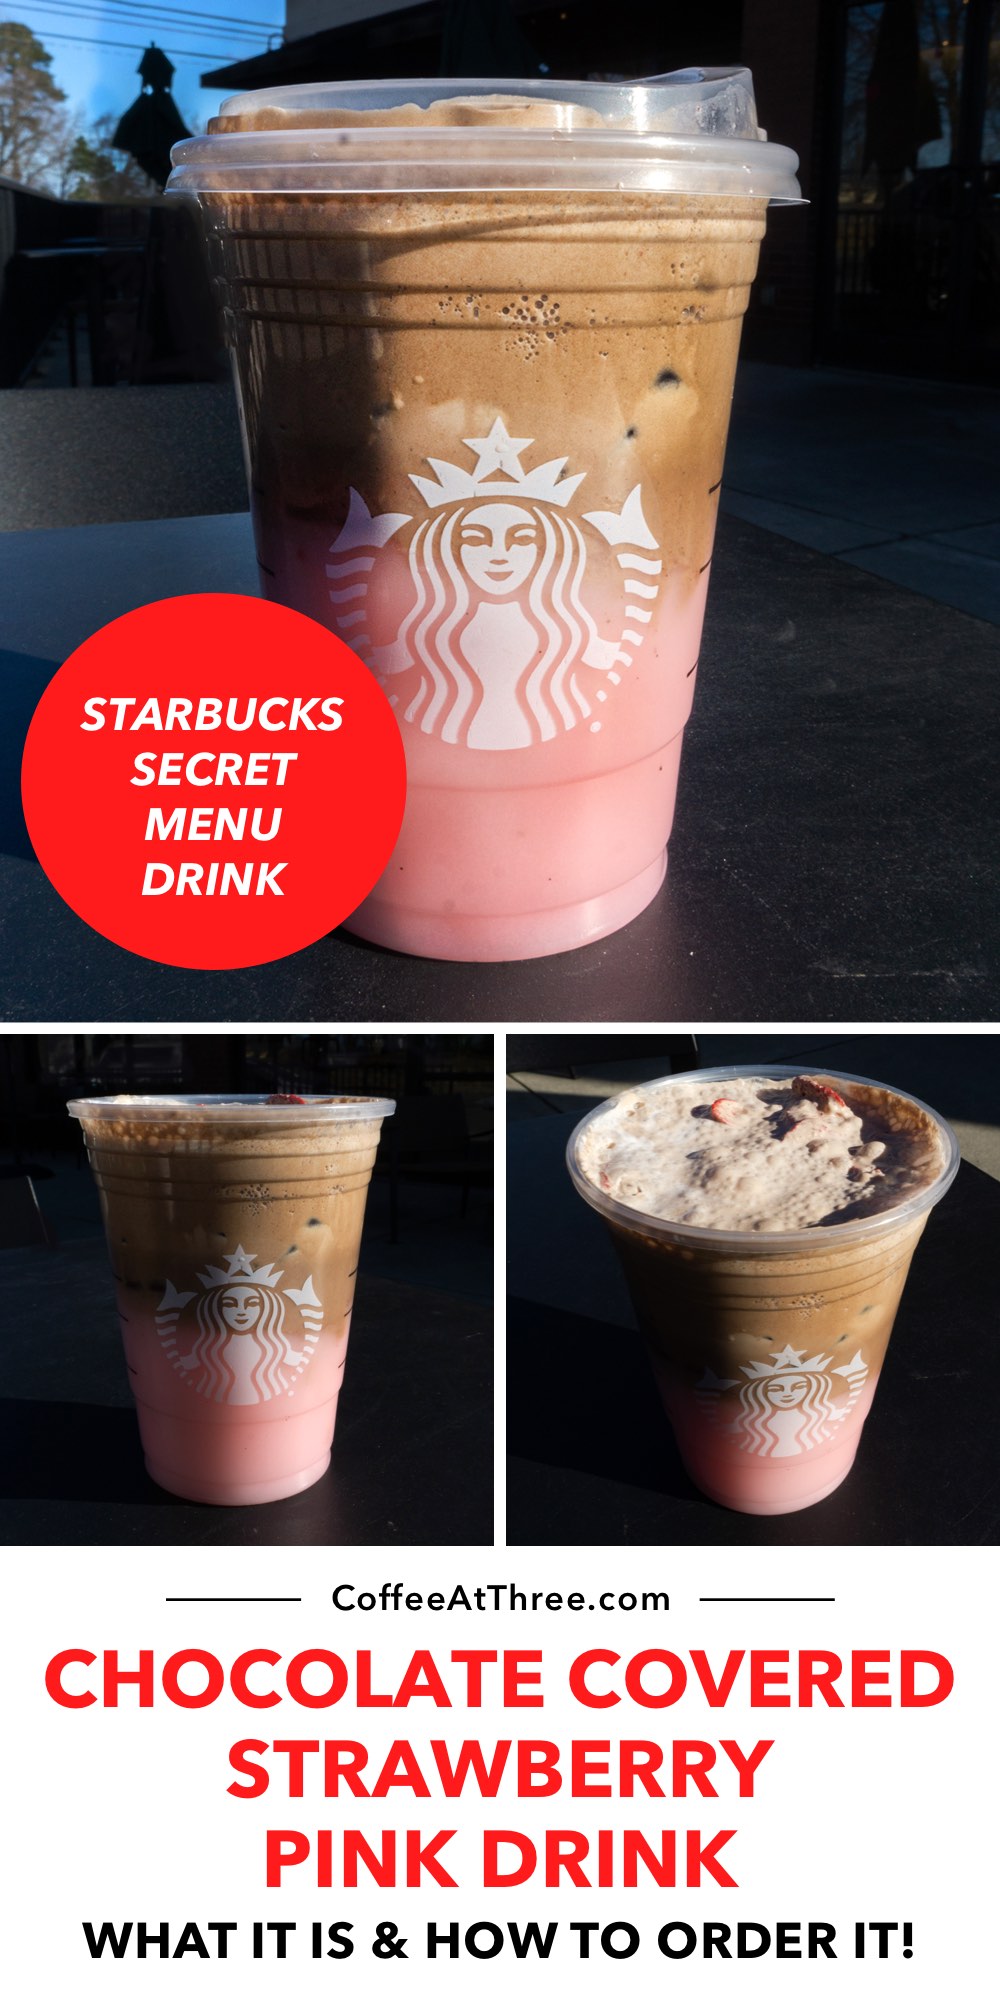 Chocolade bedekte aardbei roze drank (Starbucks Secret Menu)